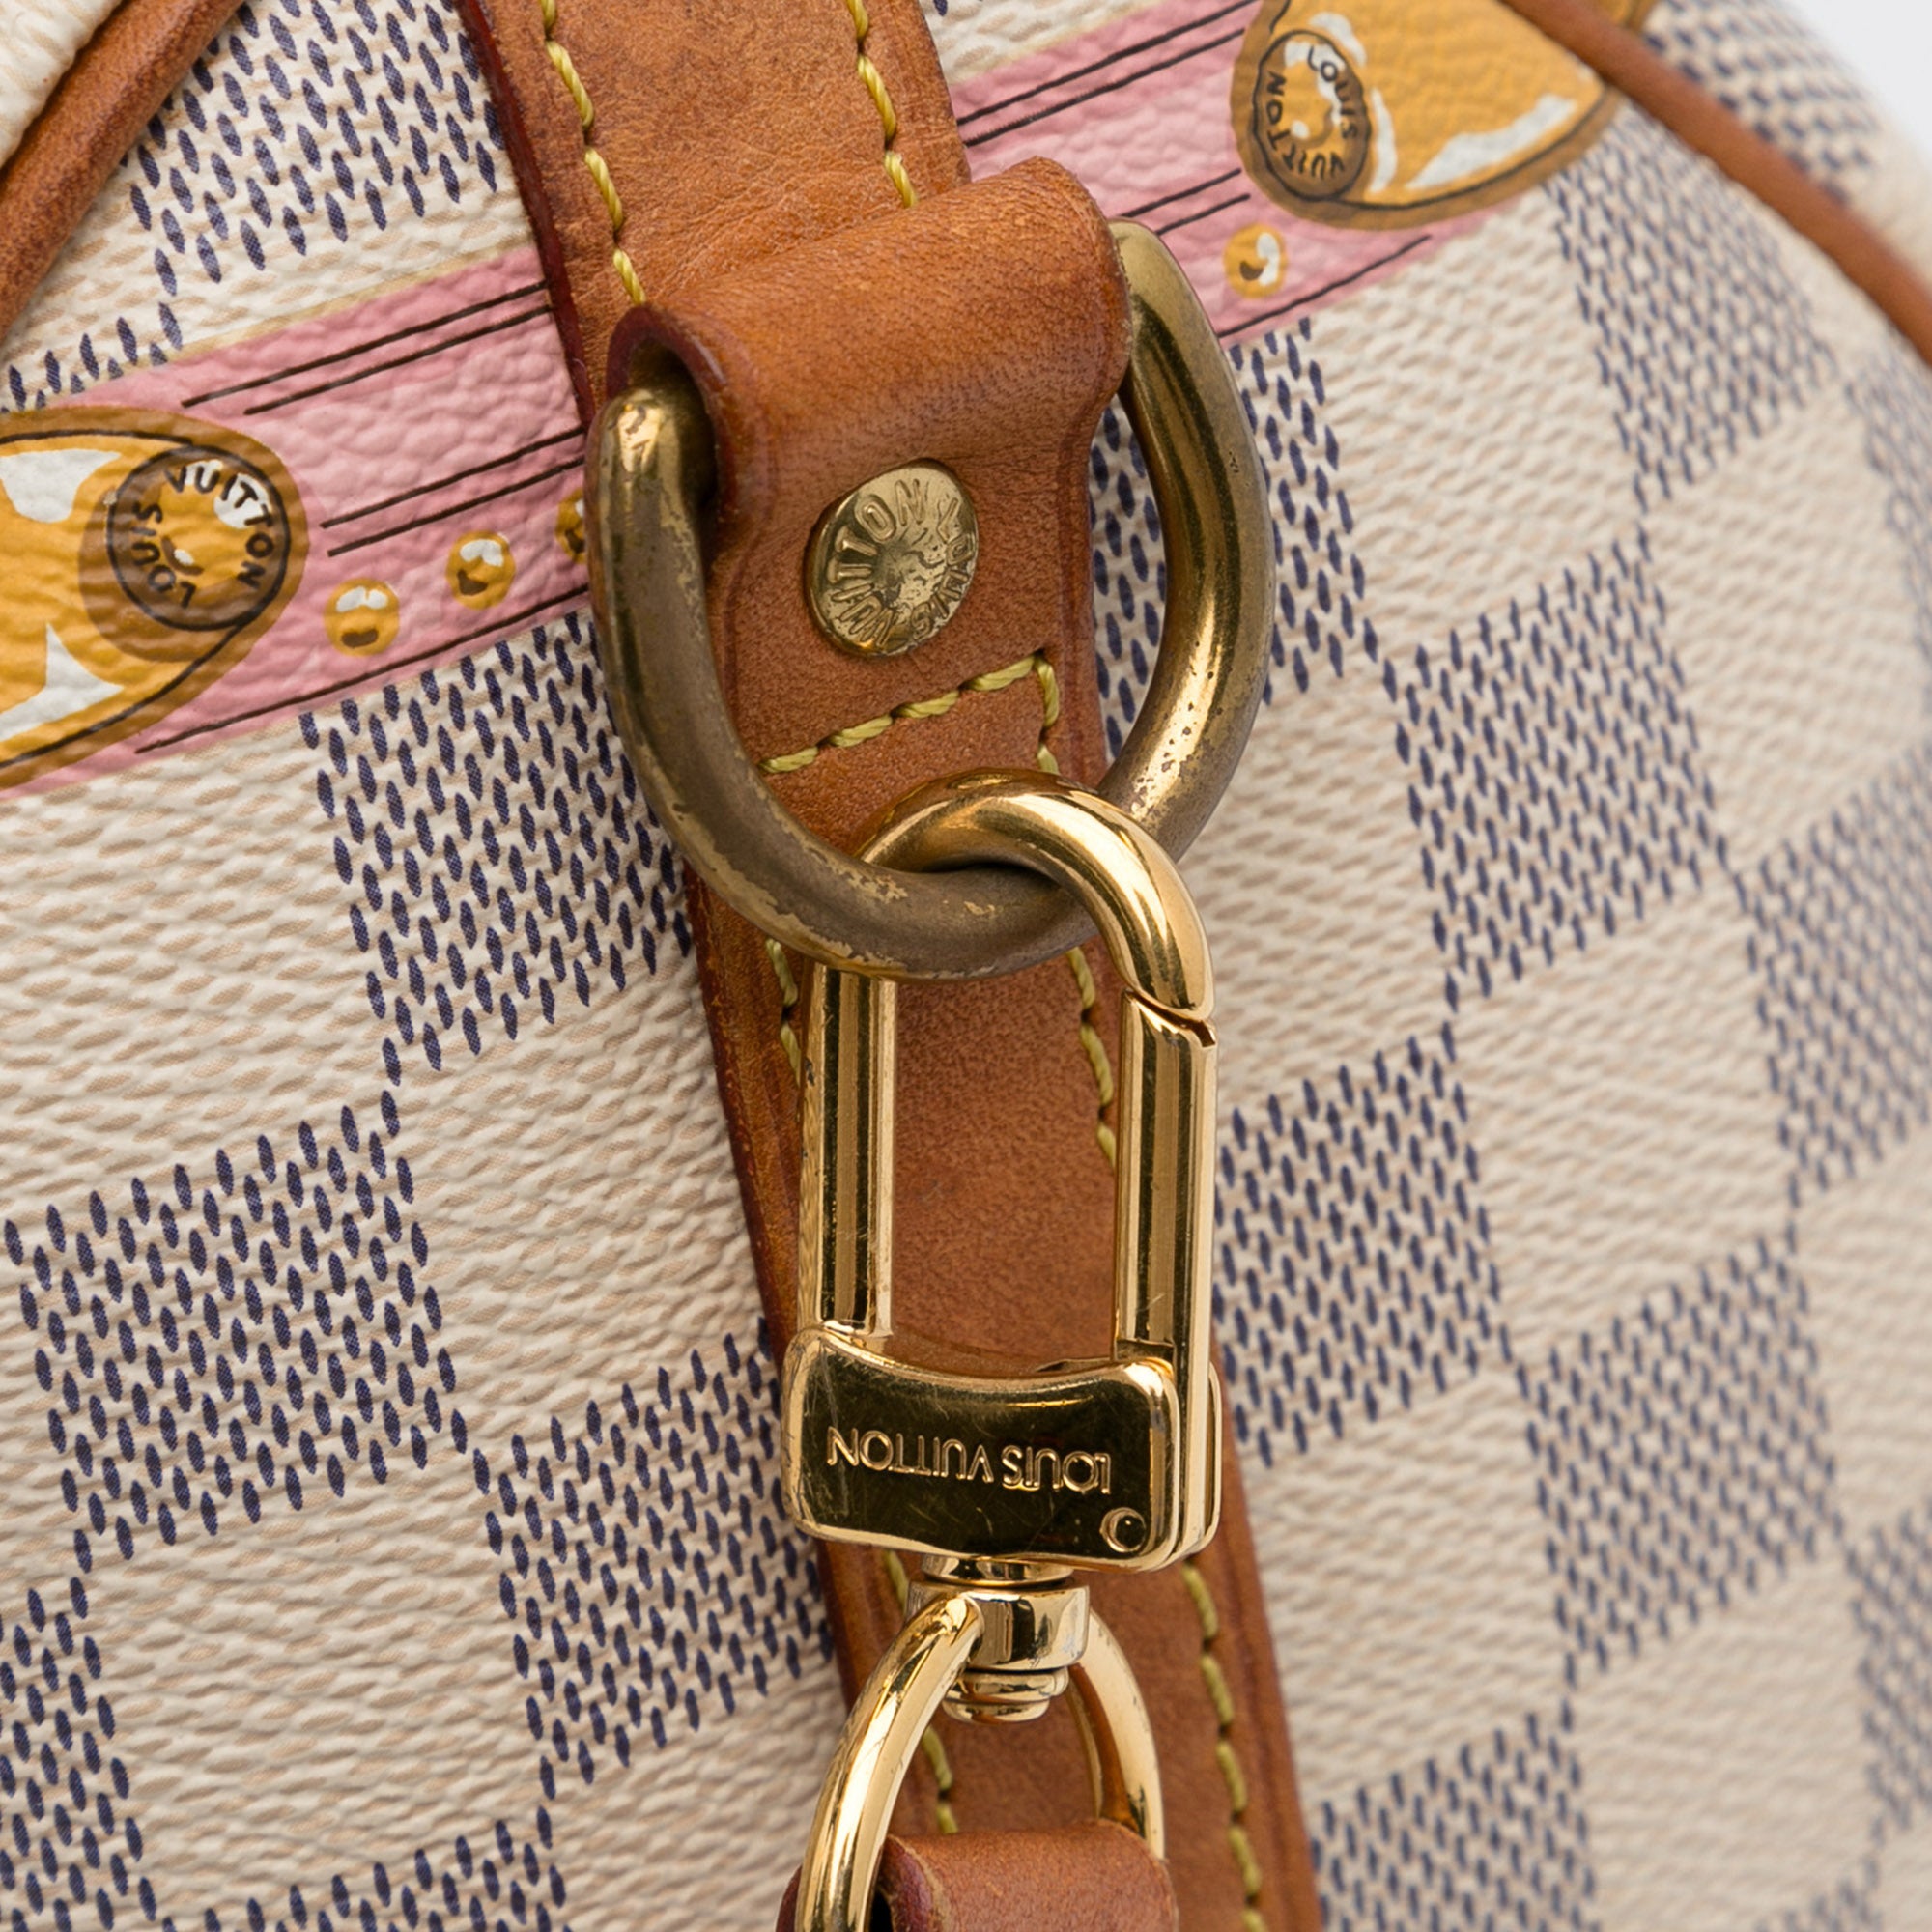 Louis-Vuitton-Damier-Azur-Speedy-30-Hand-Bag-Boston-Bag-N41533